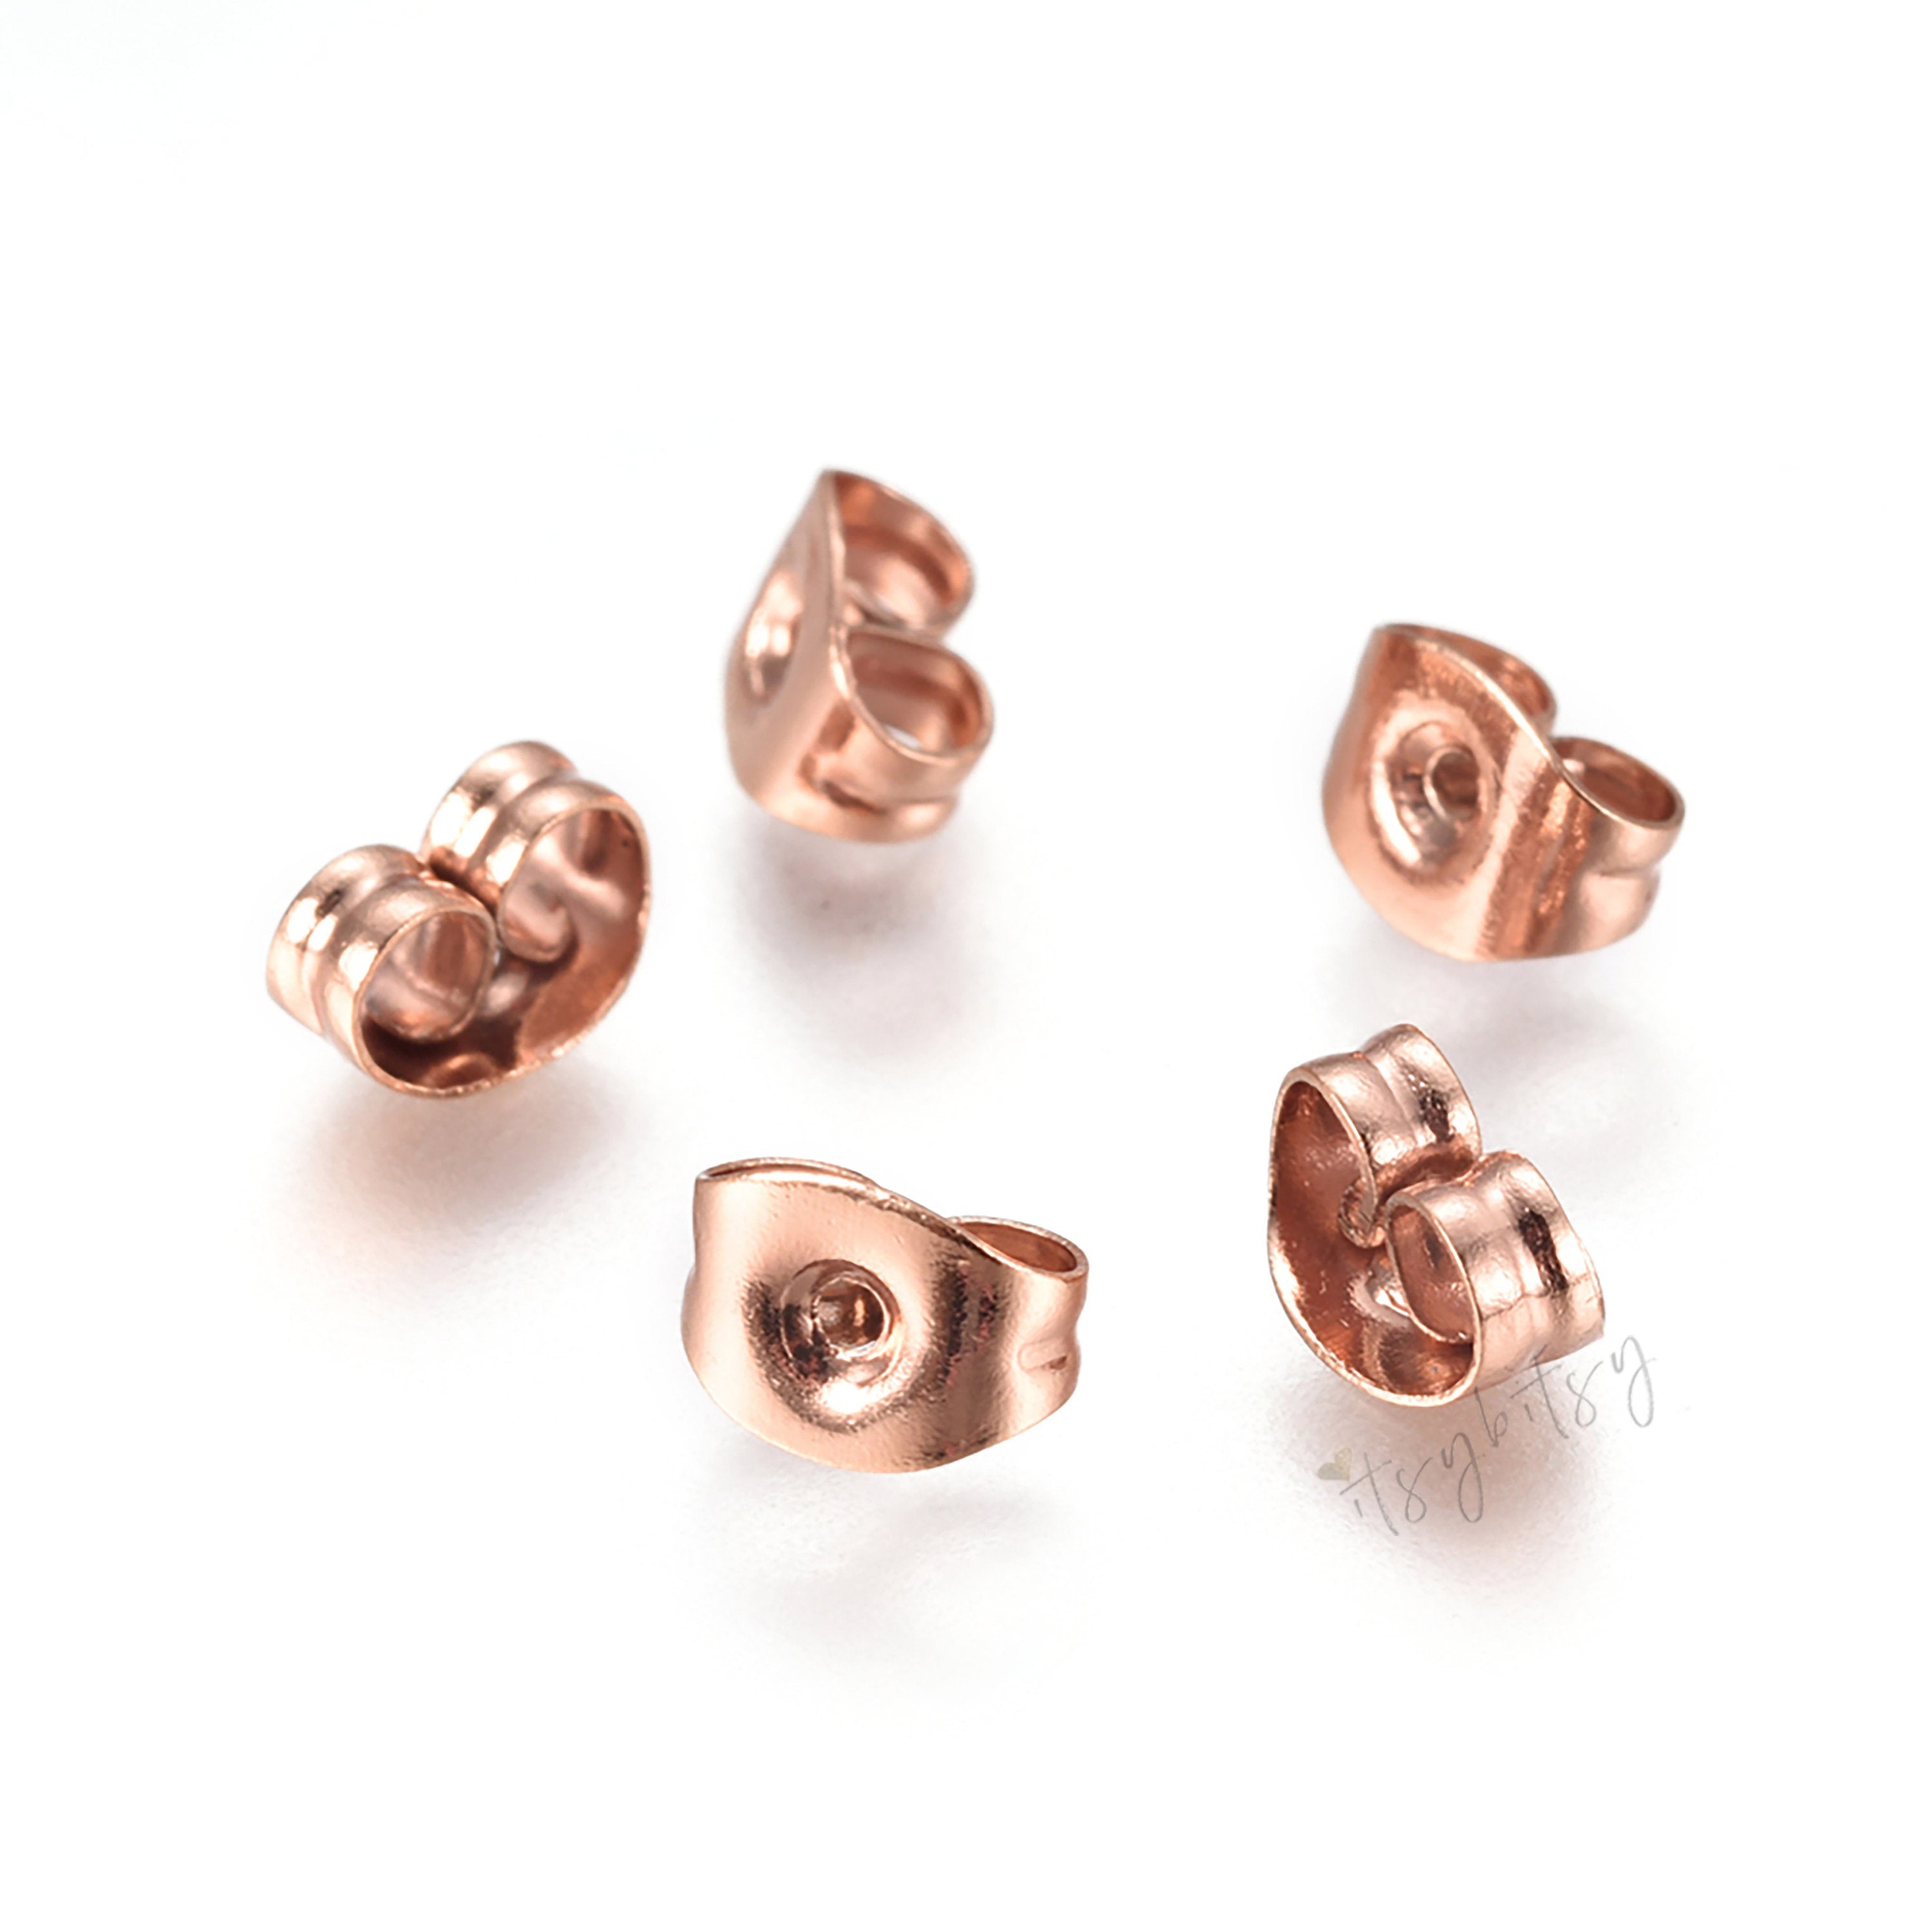 10pcs, 12x7mm, 304 Stainless Steel Ear Nuts, Earring Backs in Rose Gold